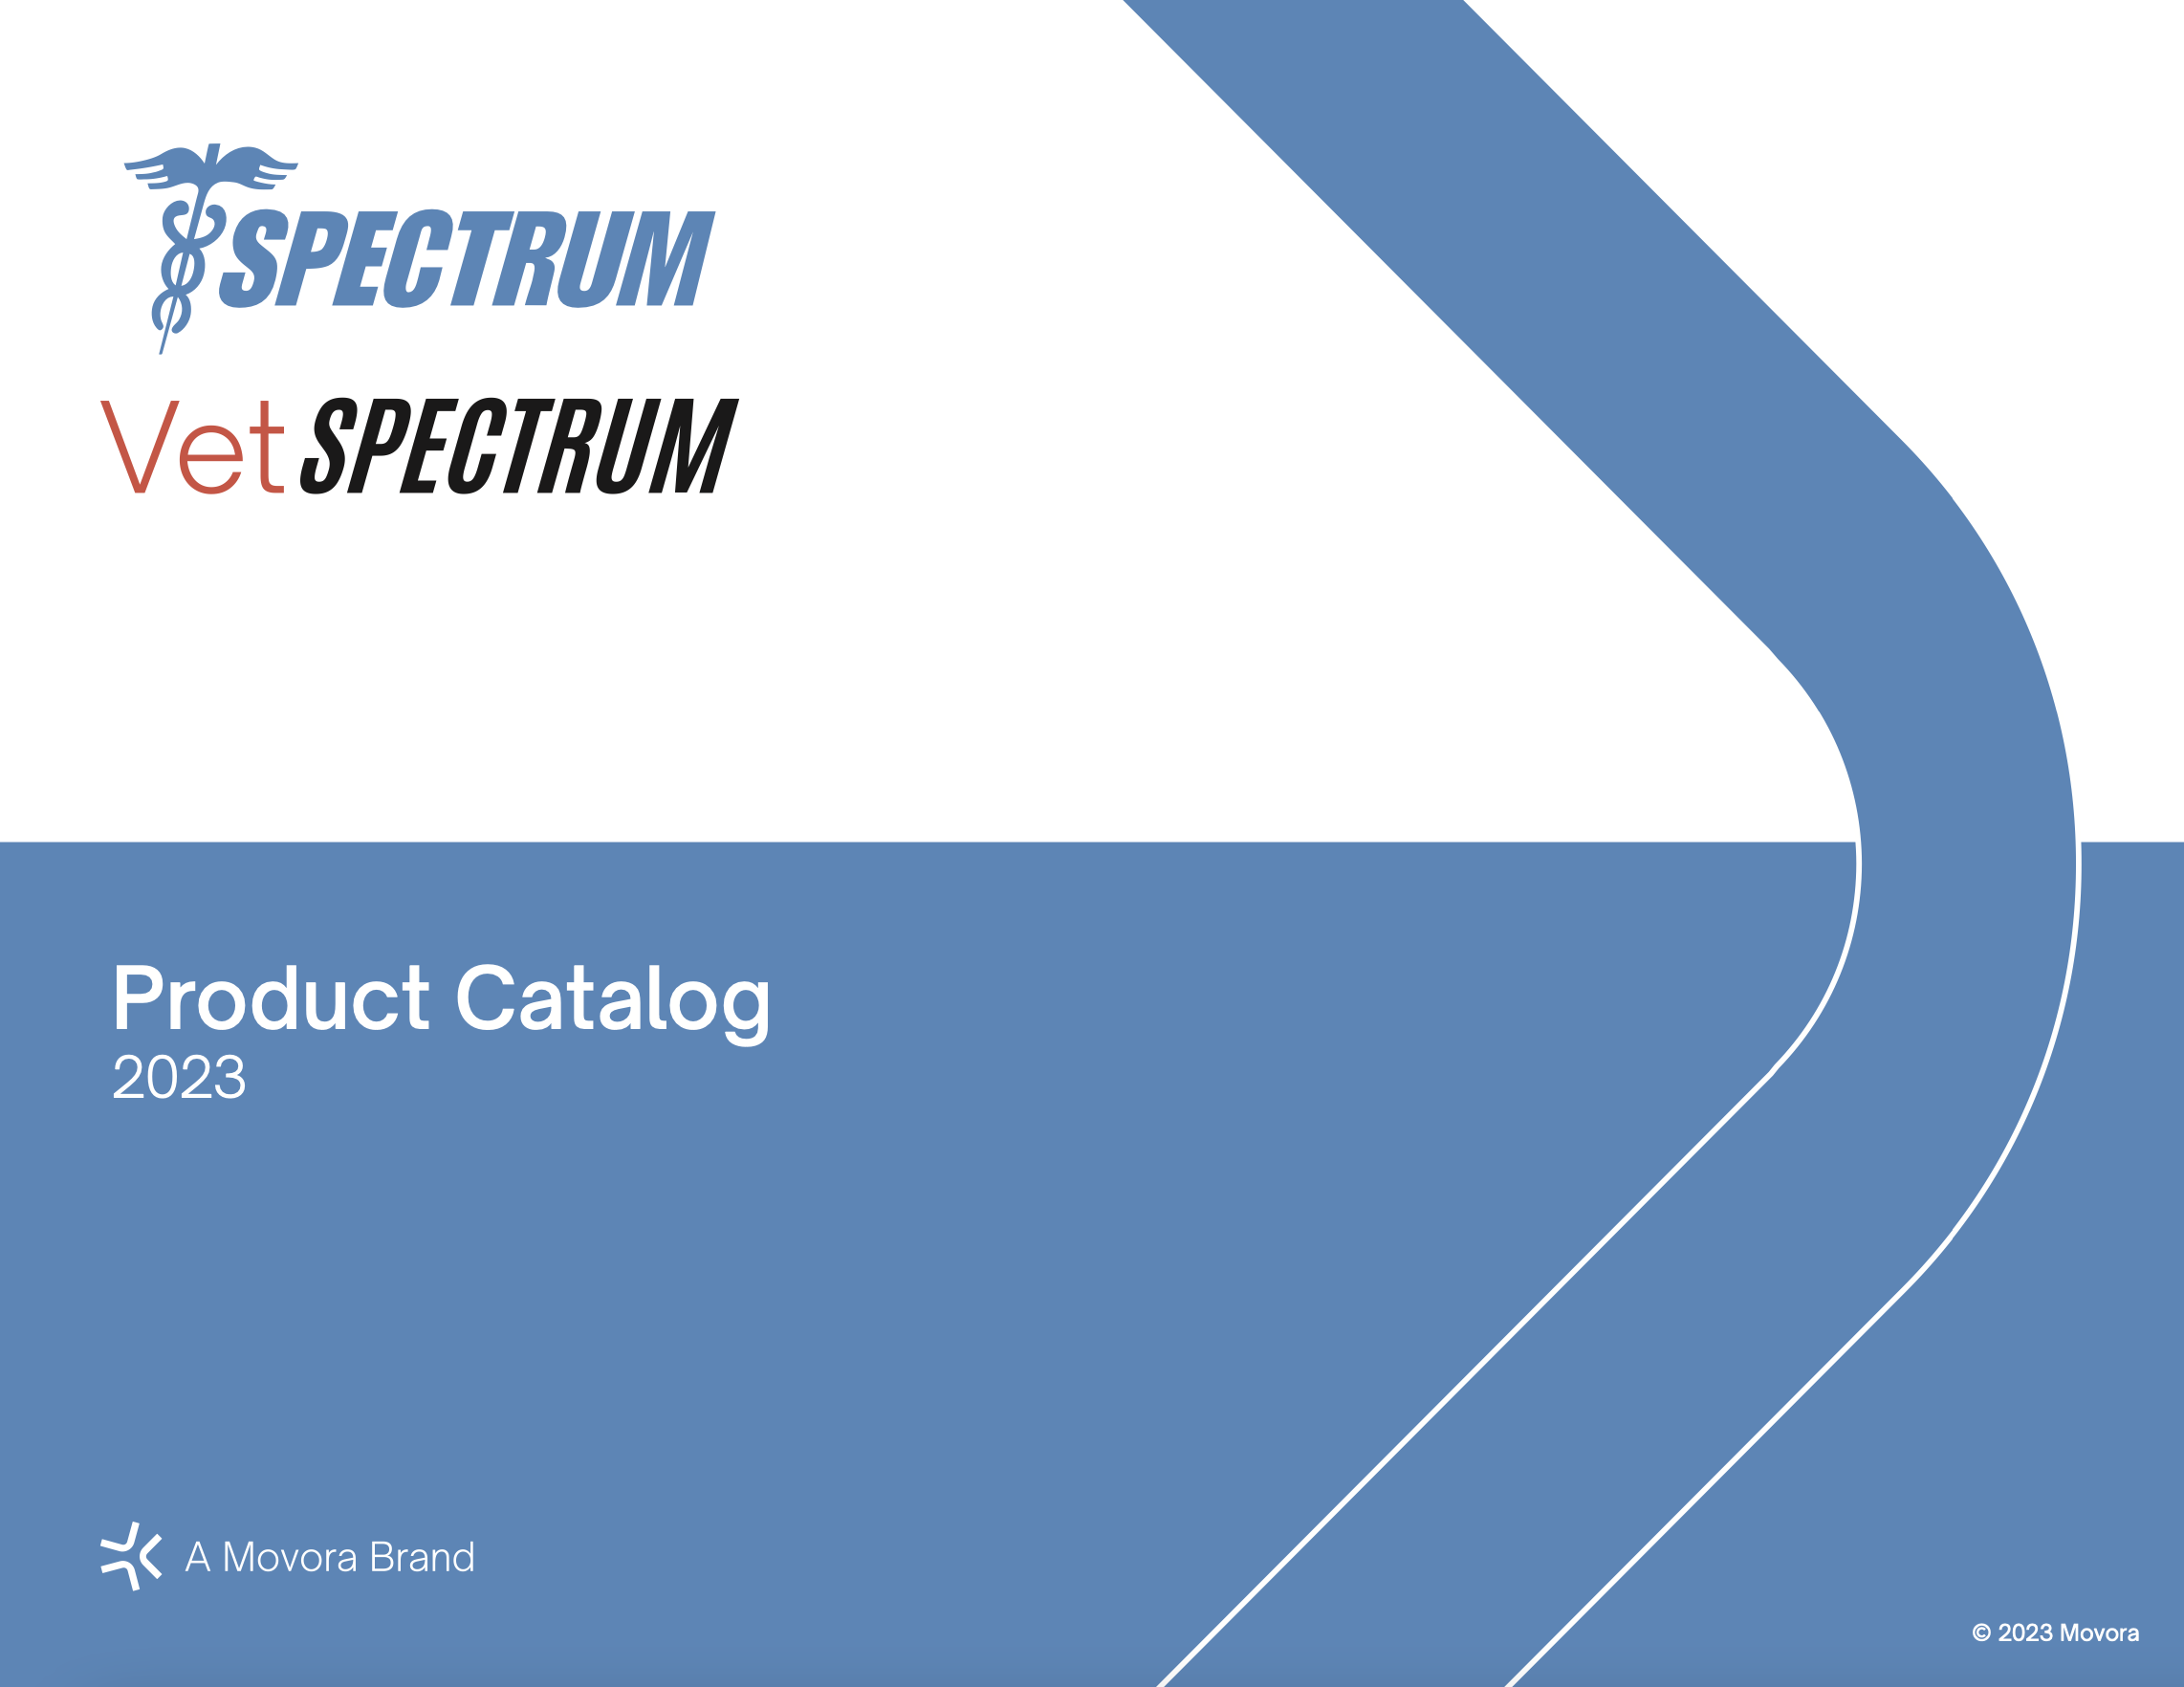 Spectrum and VetSpectrum Product Catalog